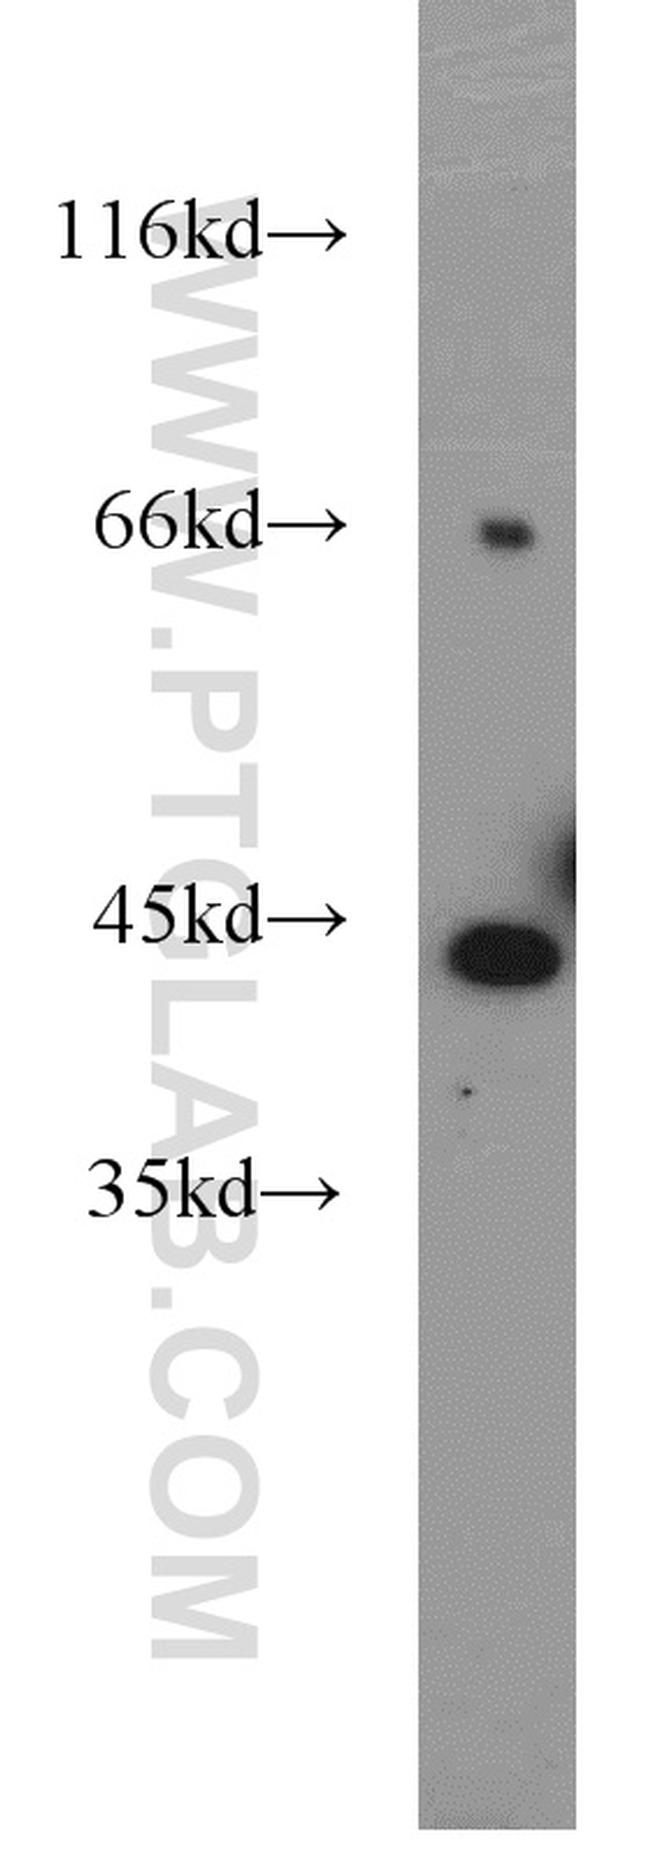 ART3 Antibody in Western Blot (WB)